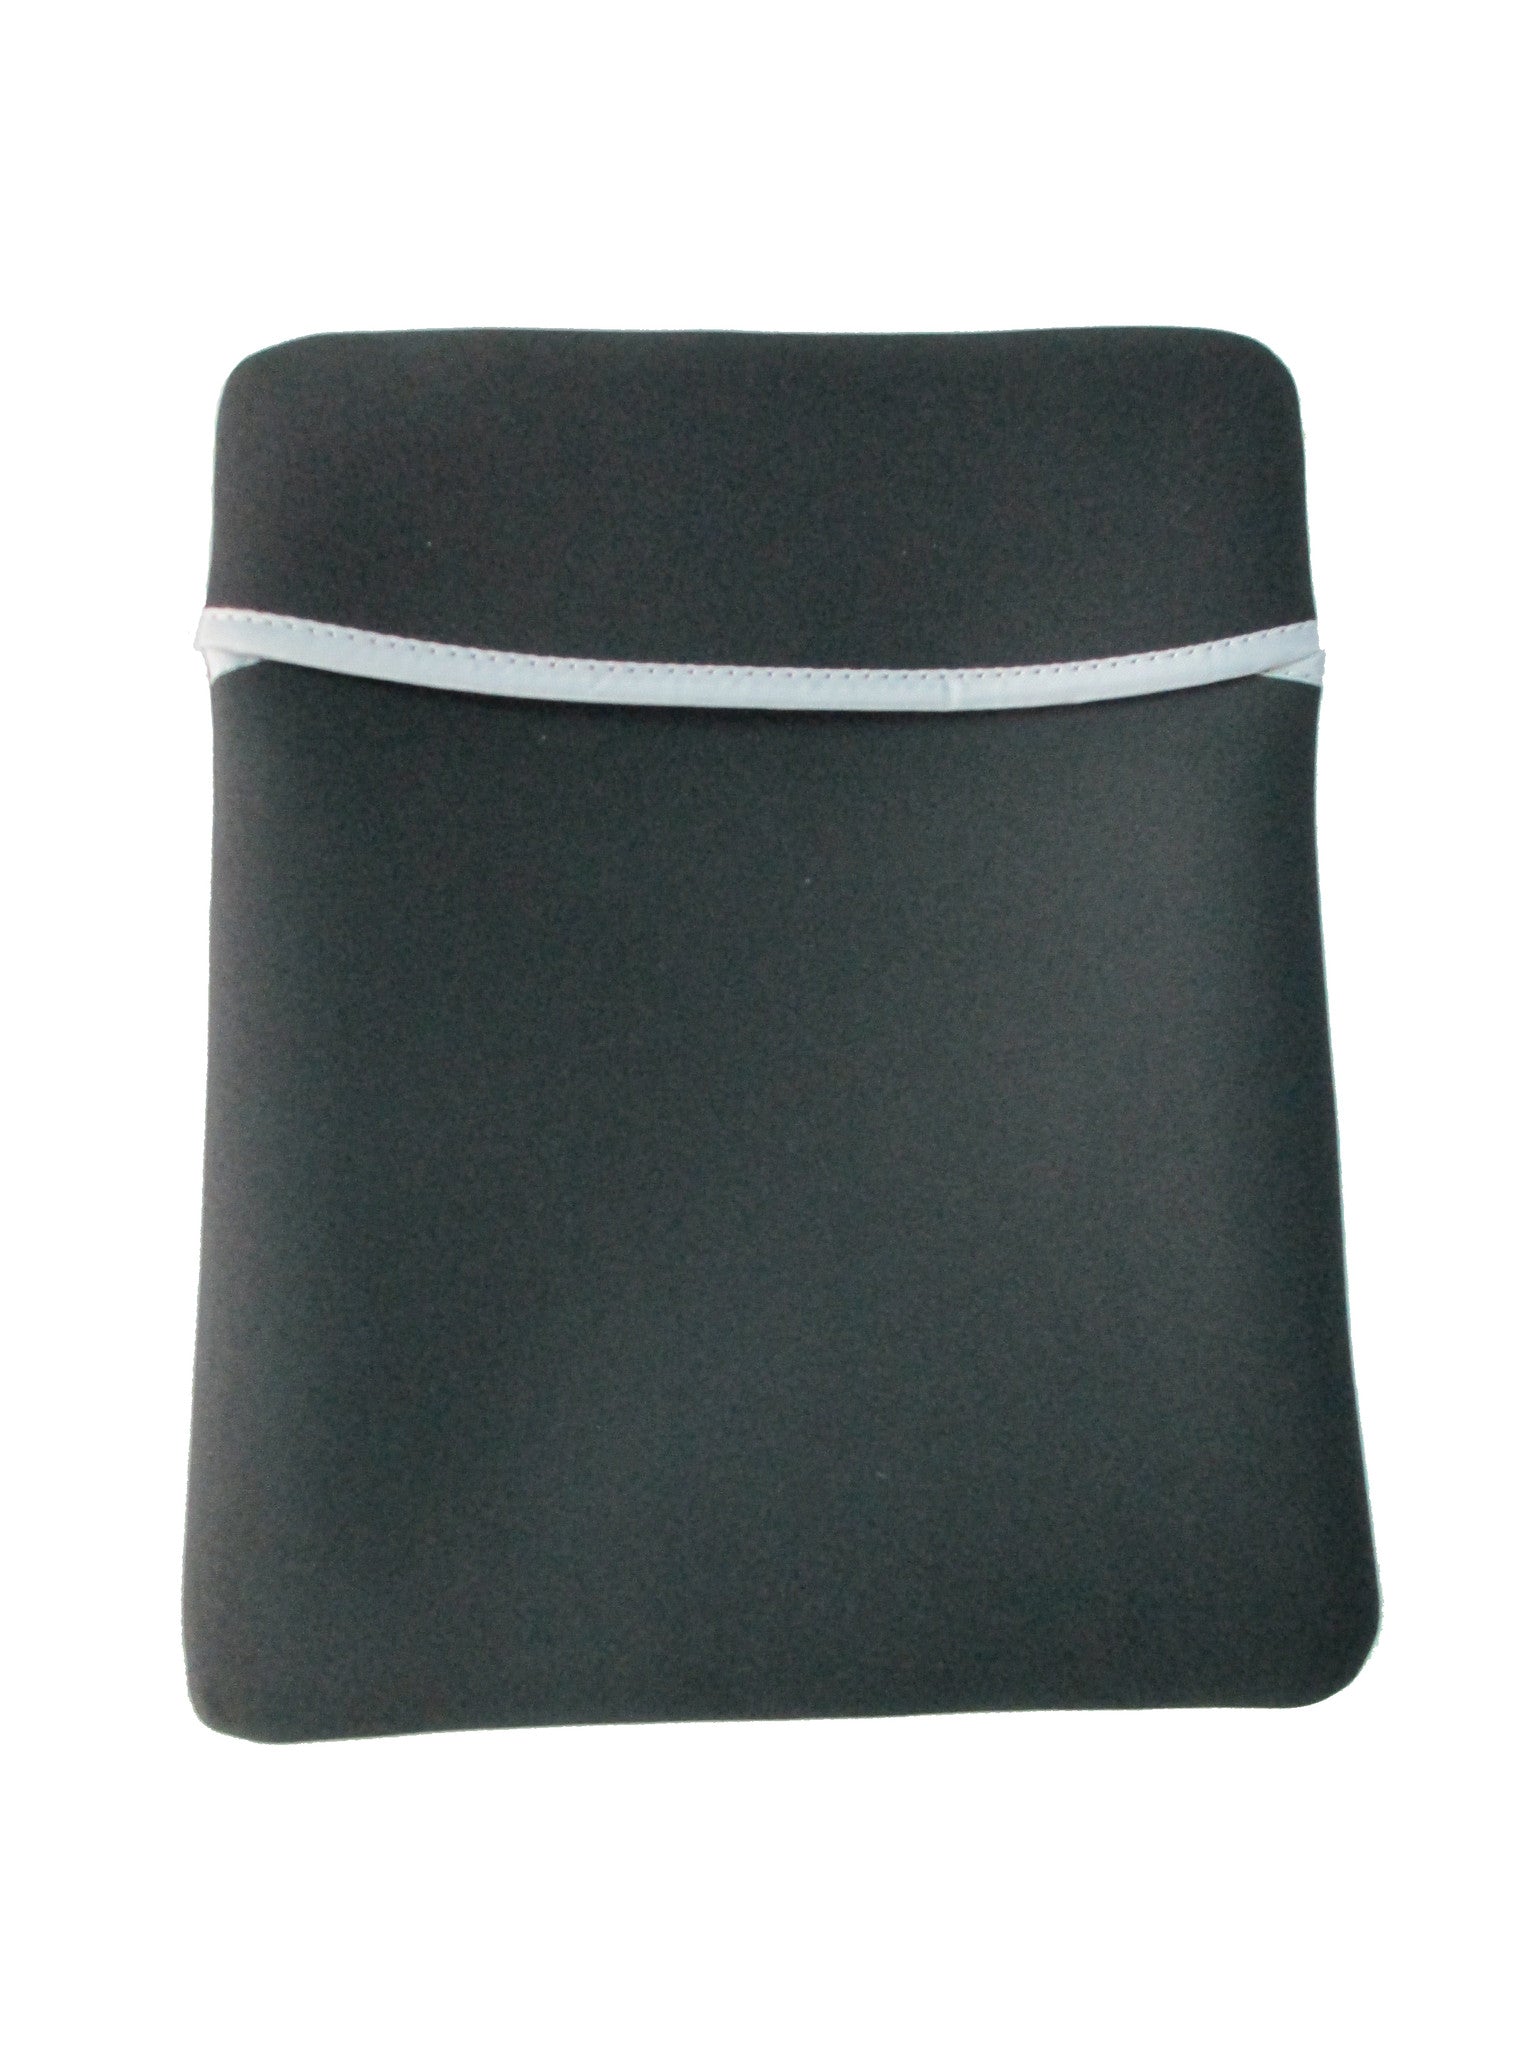 Black 10 inch neoprene ipad/tablet soft case/sleeve, Computer Accessories - Presence